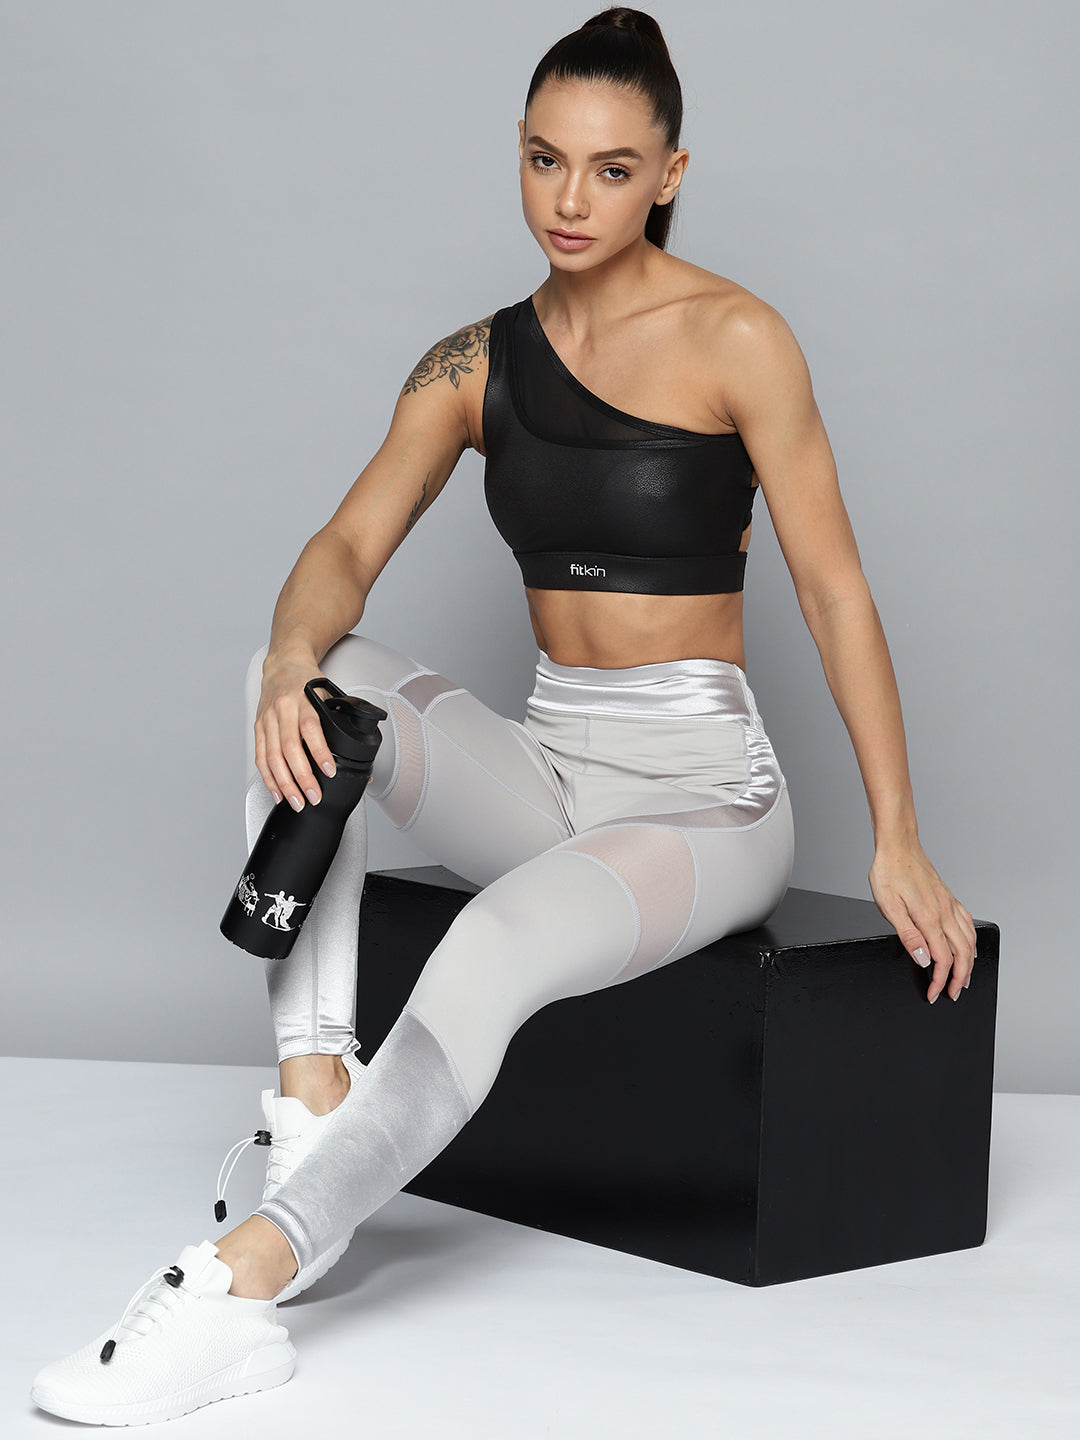 Buy Fitkin Womens Black Textured One Shoulder Sports Bra online